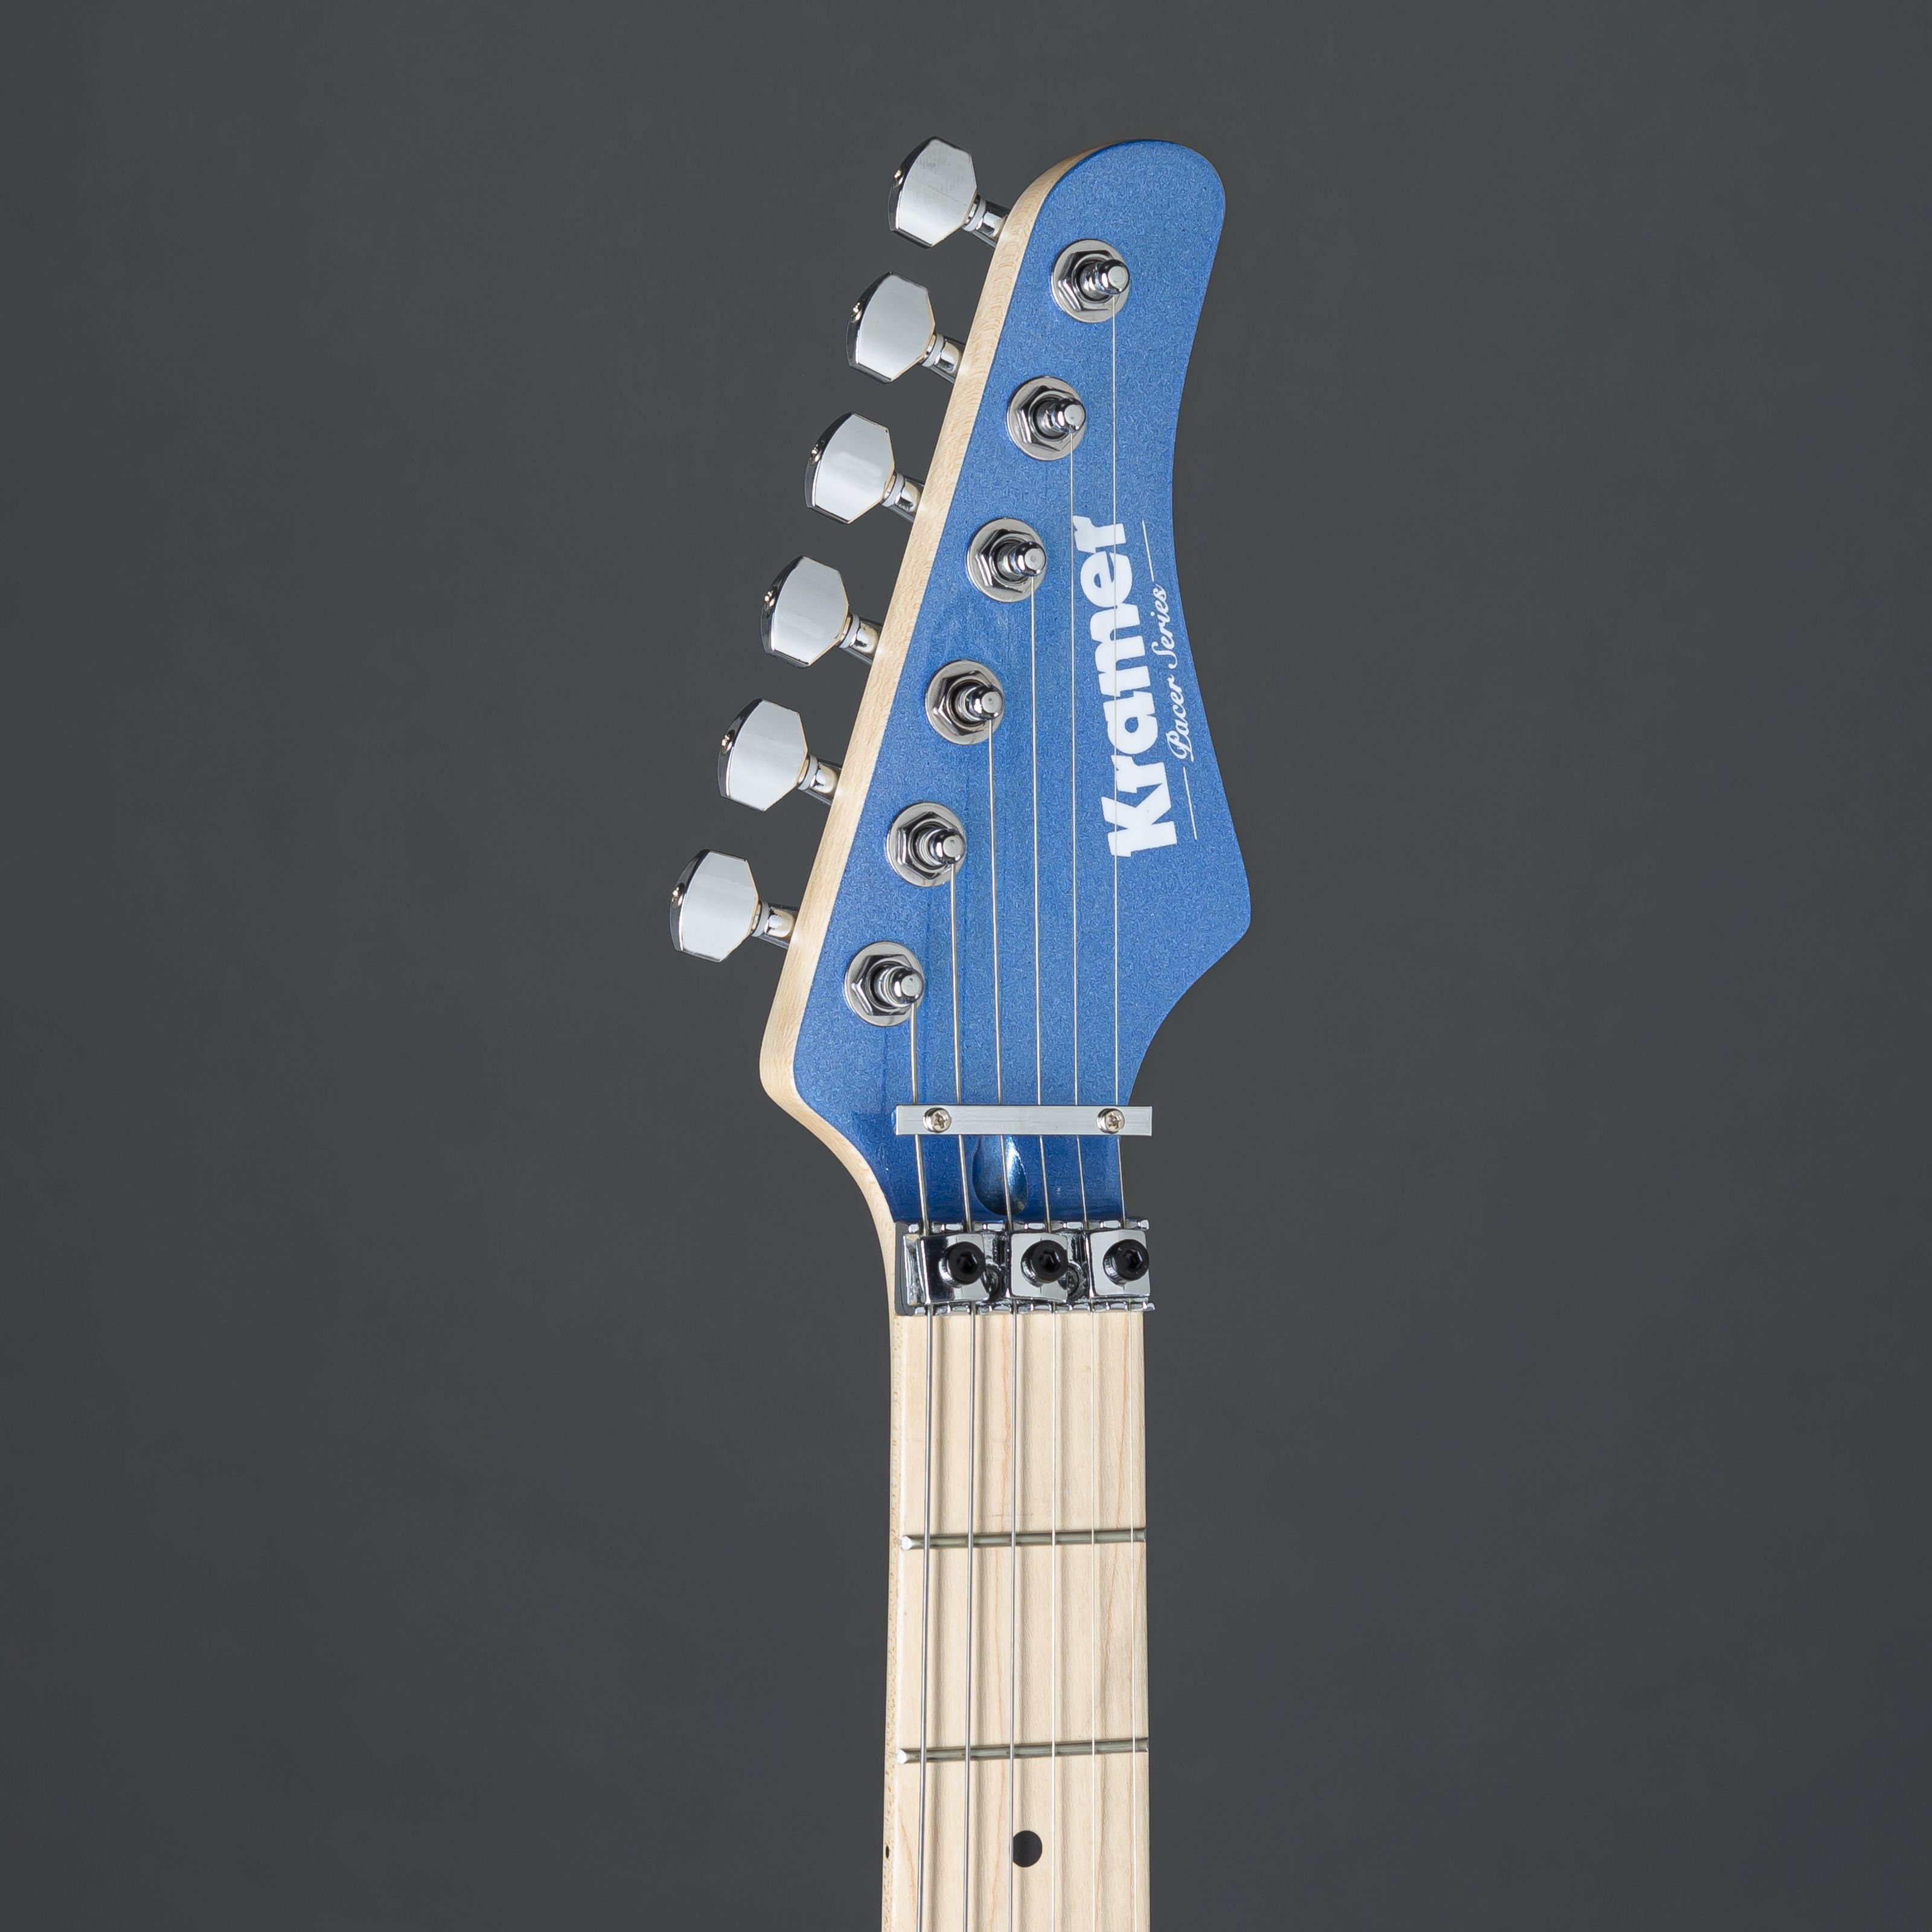 Metallic Pacer - E-Gitarre Guitars Spielzeug-Musikinstrument, Blue Classic Radio Kramer